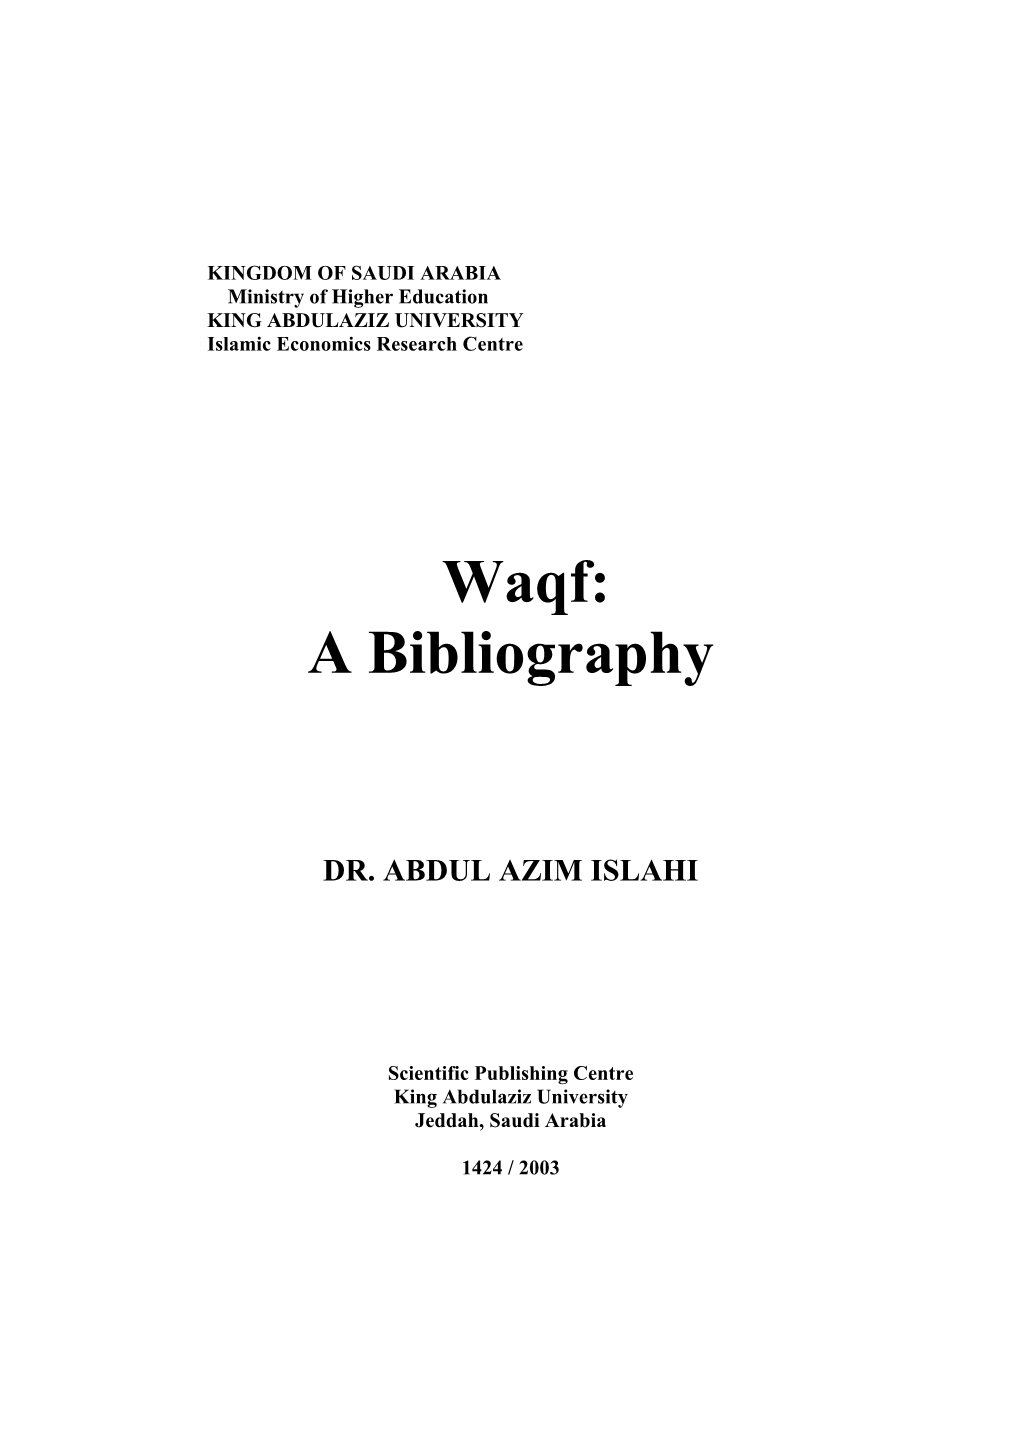 Waqf: a Bibliography